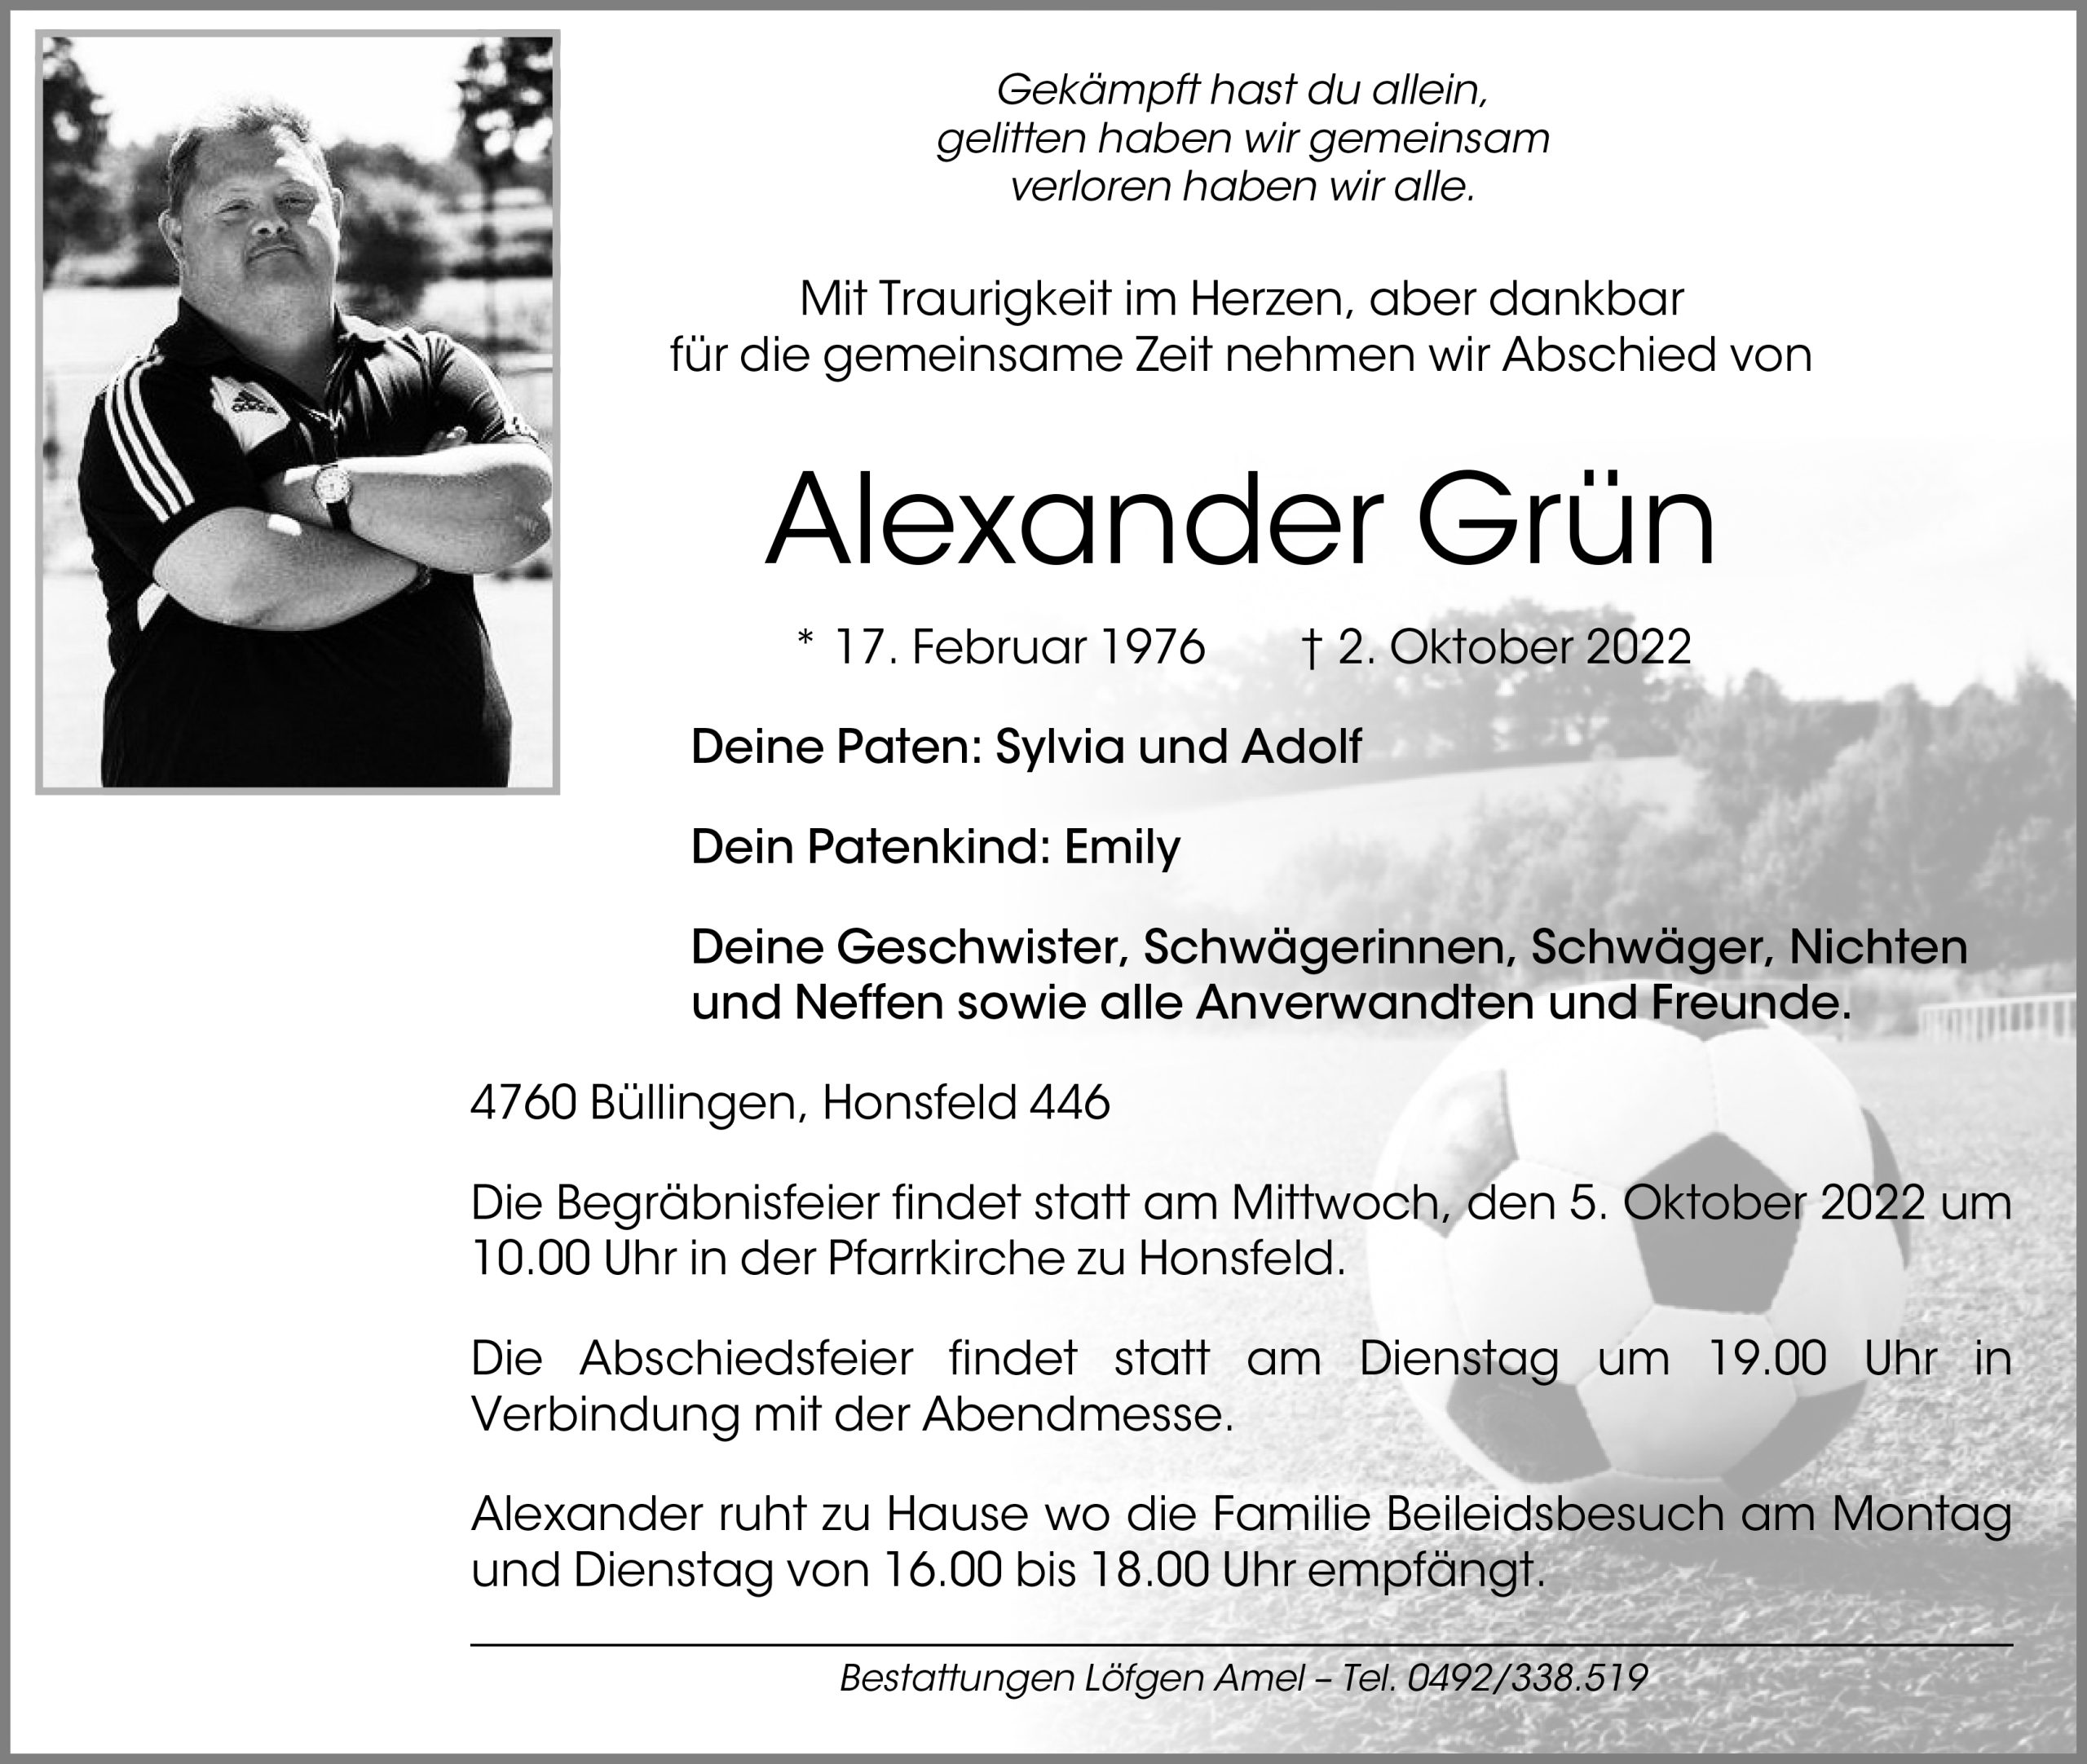 Alexander Grün